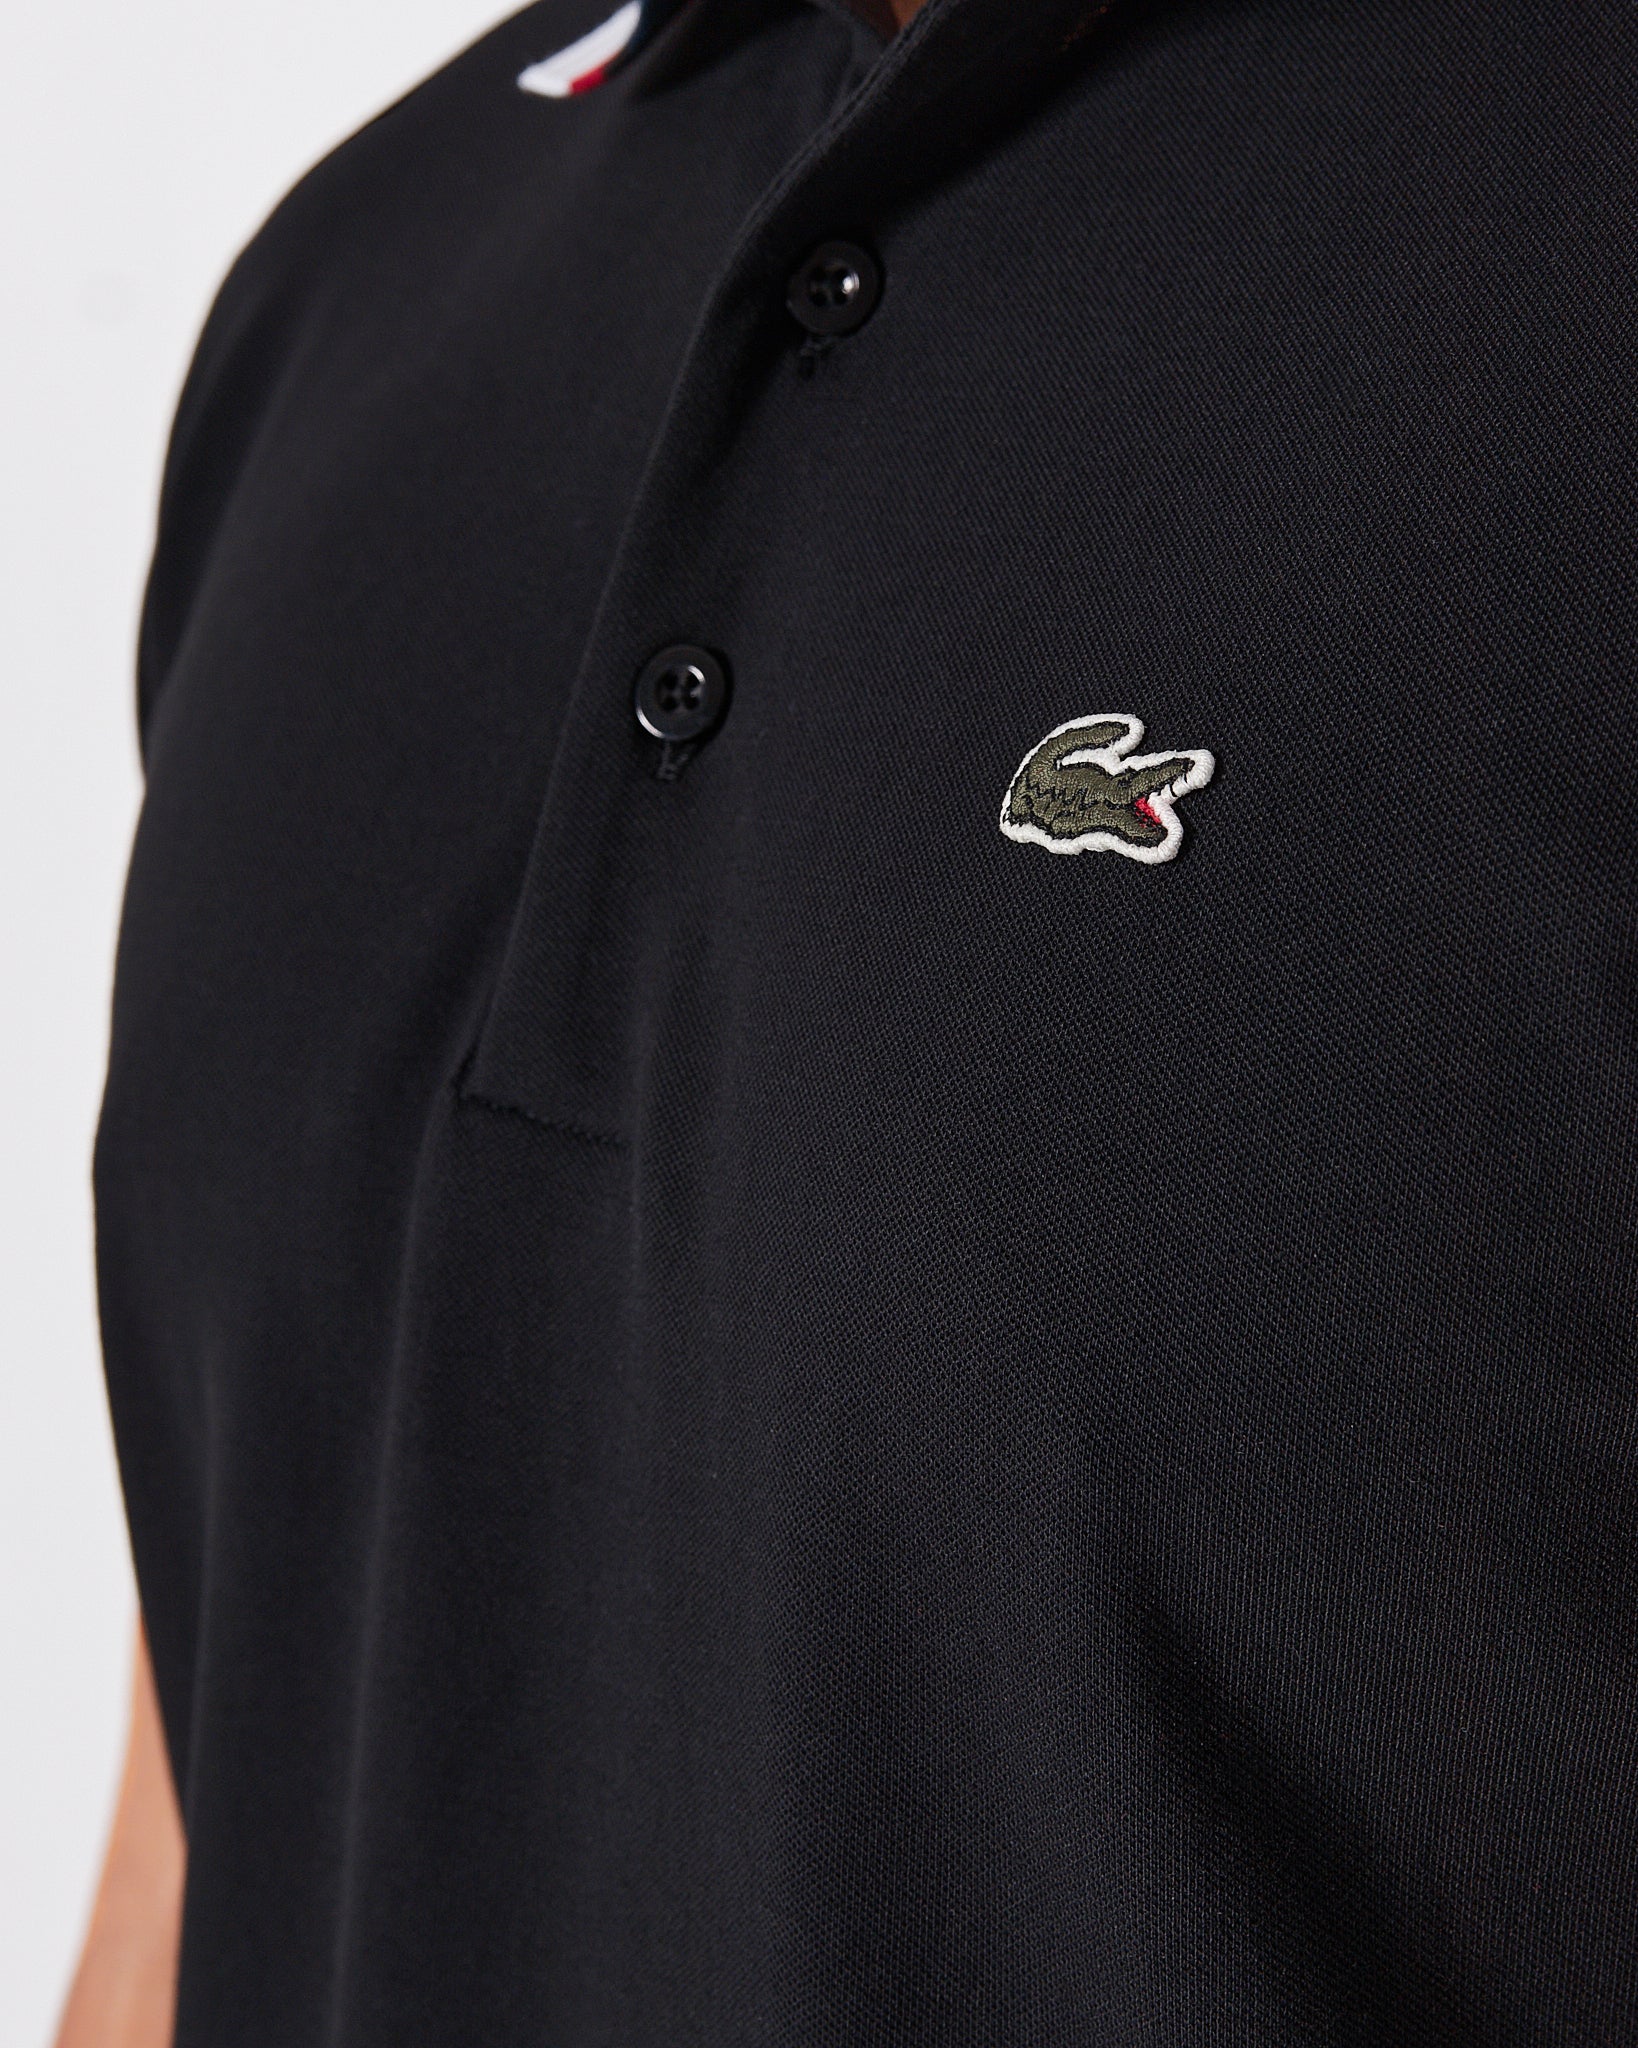 LAC Striped Collar Men Black Polo Shirt 23.90